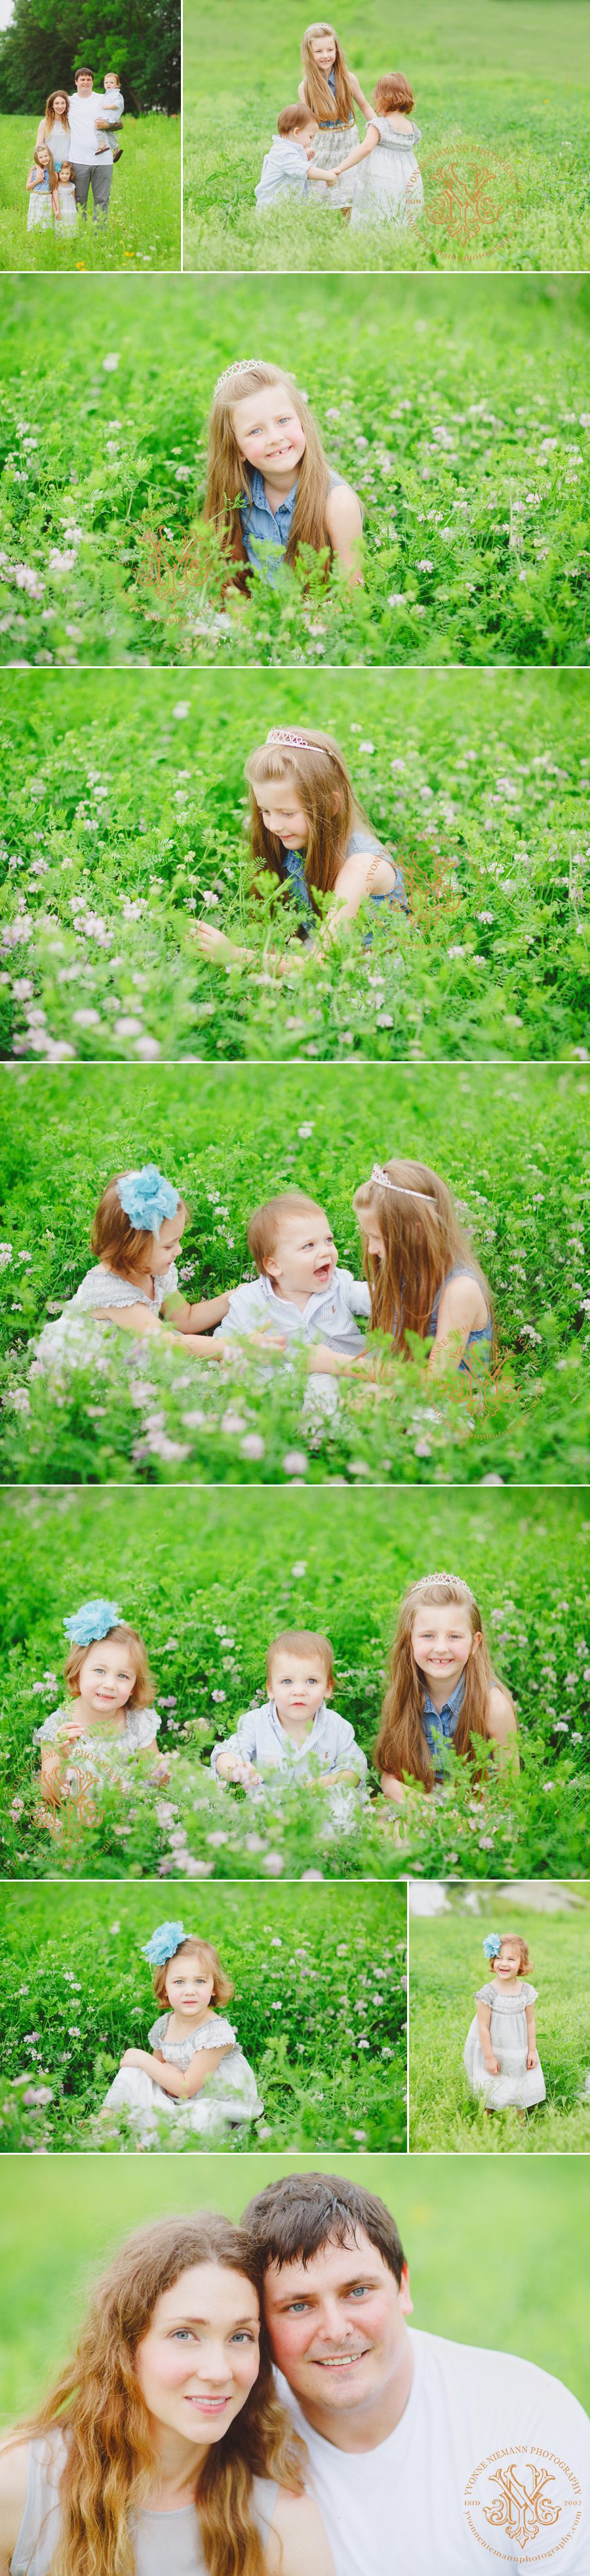 Three siblings playing in a field of flowers in Bishop, GA in the Spring.